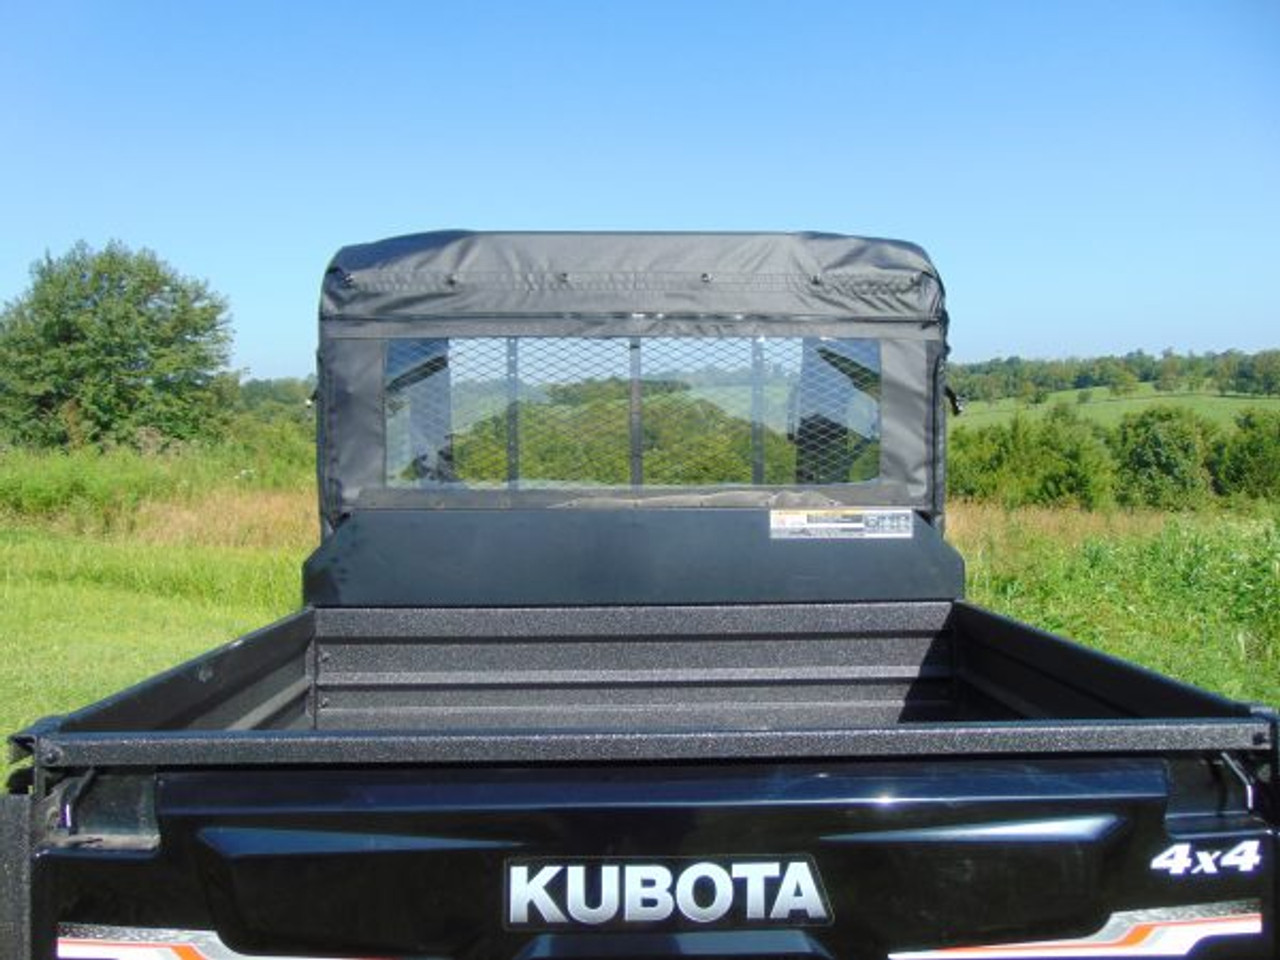 3 Star side x side Kubota RTV XG850 soft rear window rear view